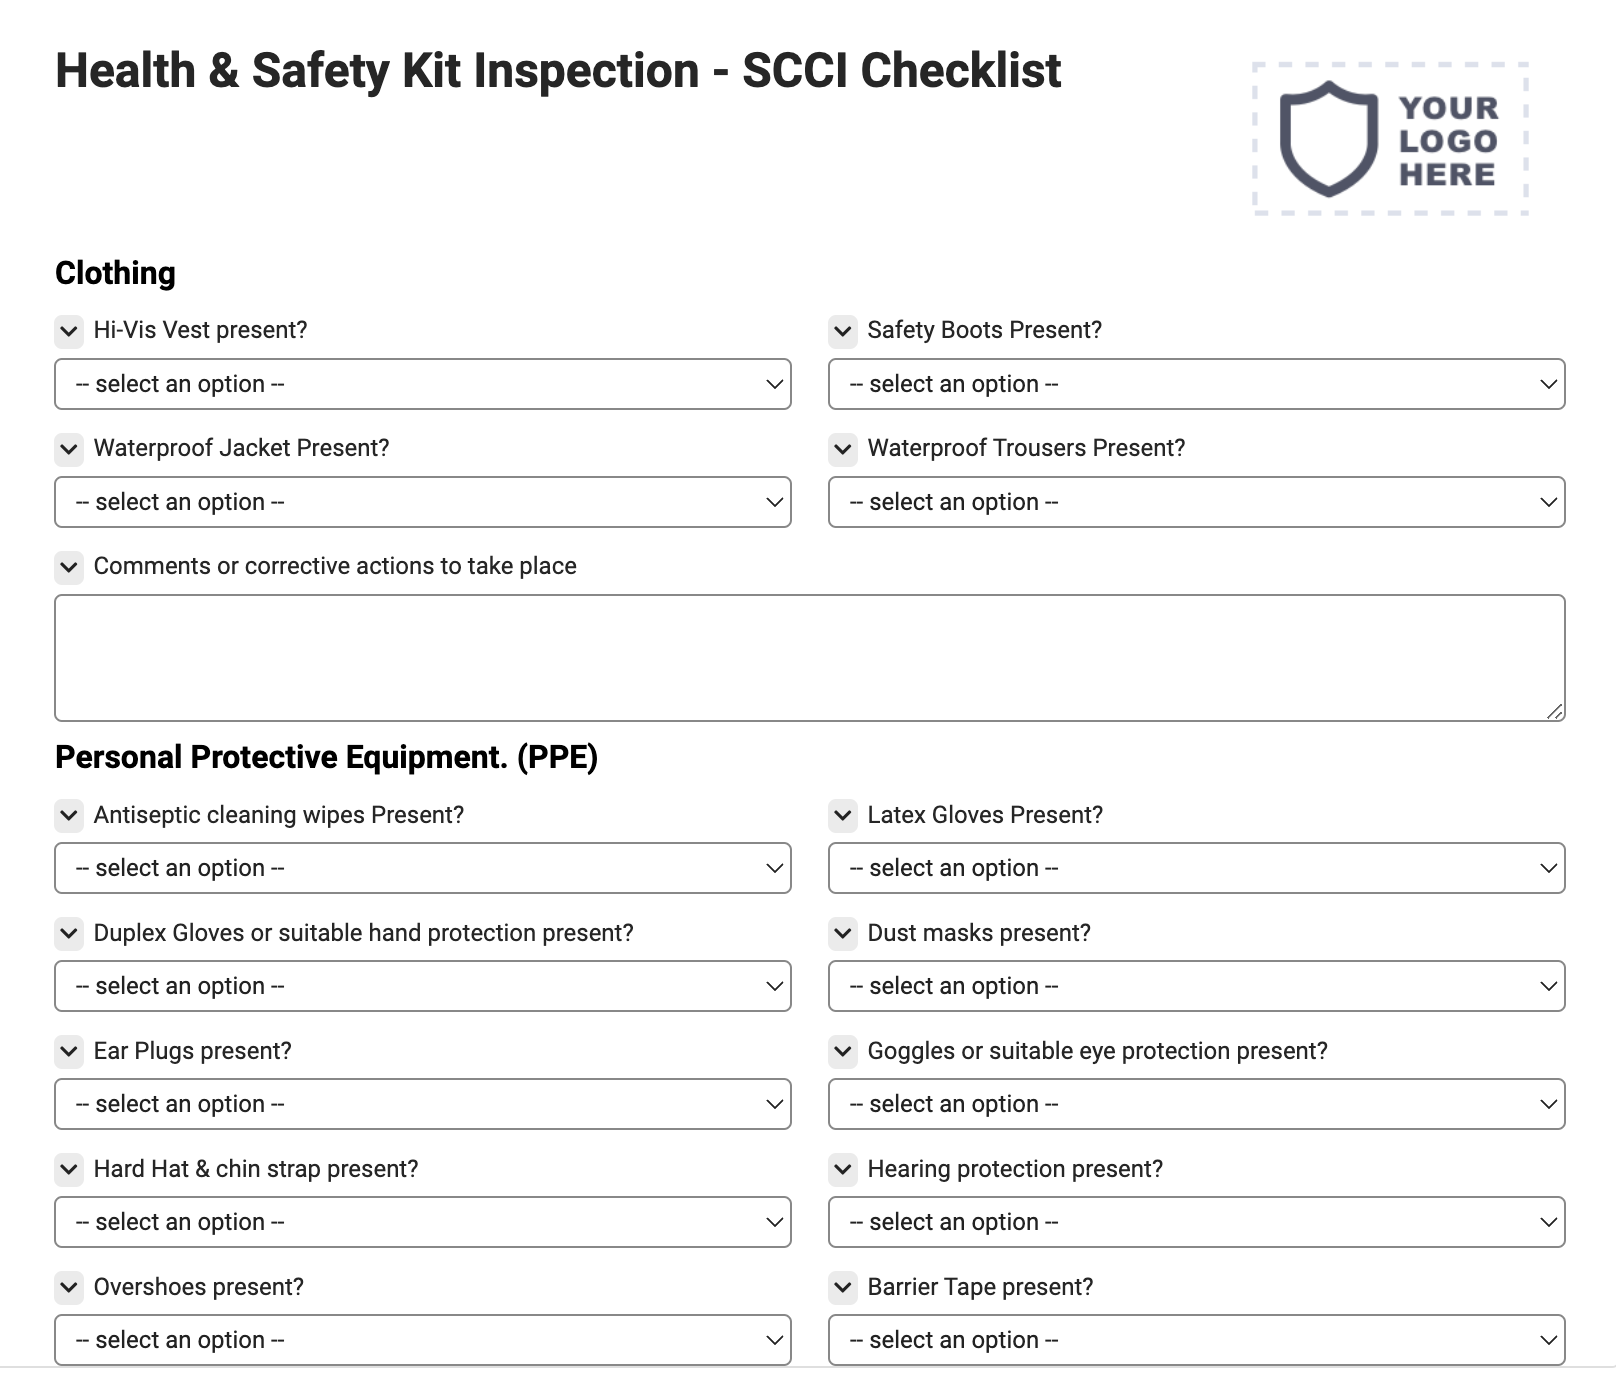 Health & Safety Kit Inspection - SCCI Checklist